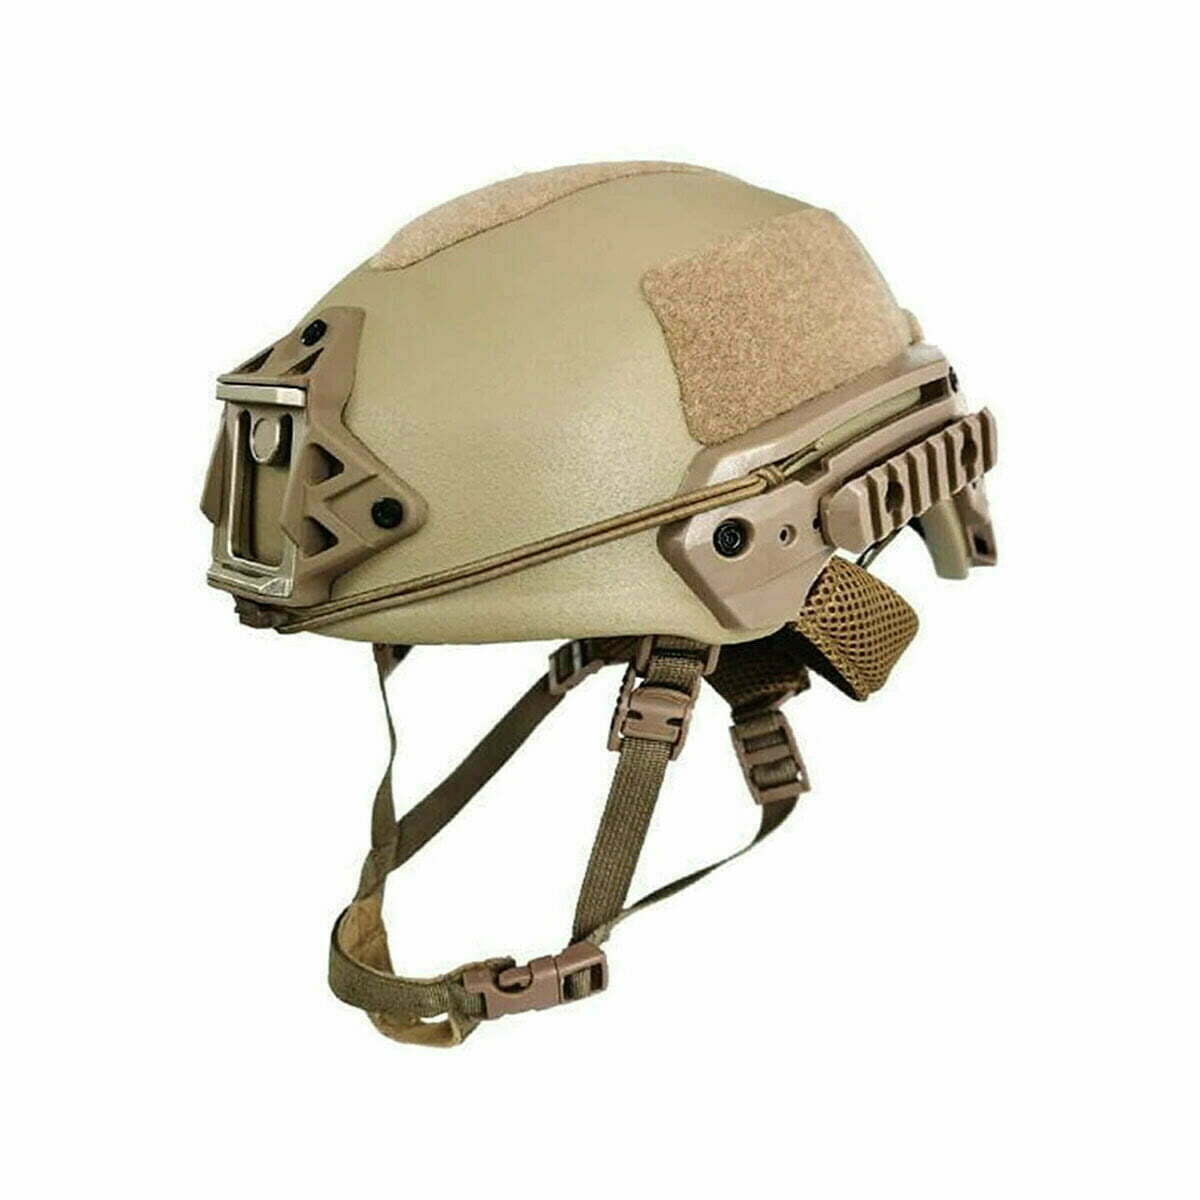 https://tyditiao.com/wp-content/uploads/2022/06/wendy-Sand-color-Bulletproof-Kevlar-Helmet-right-elevation.jpg